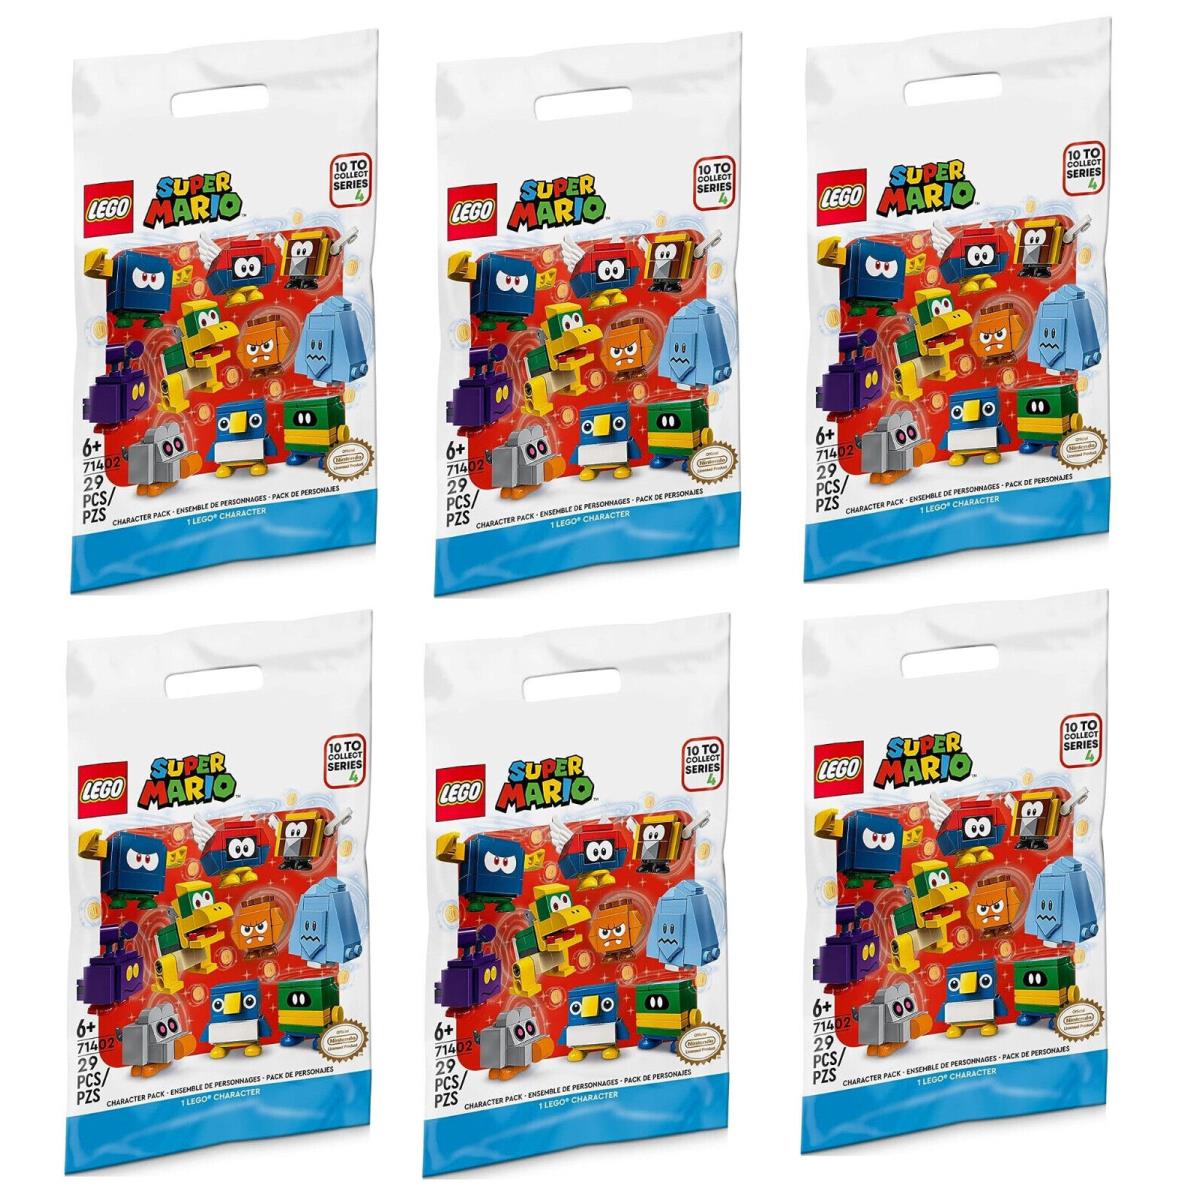 6 Packs of Lego 71402 Series 4 Super Mario Character Nintendo